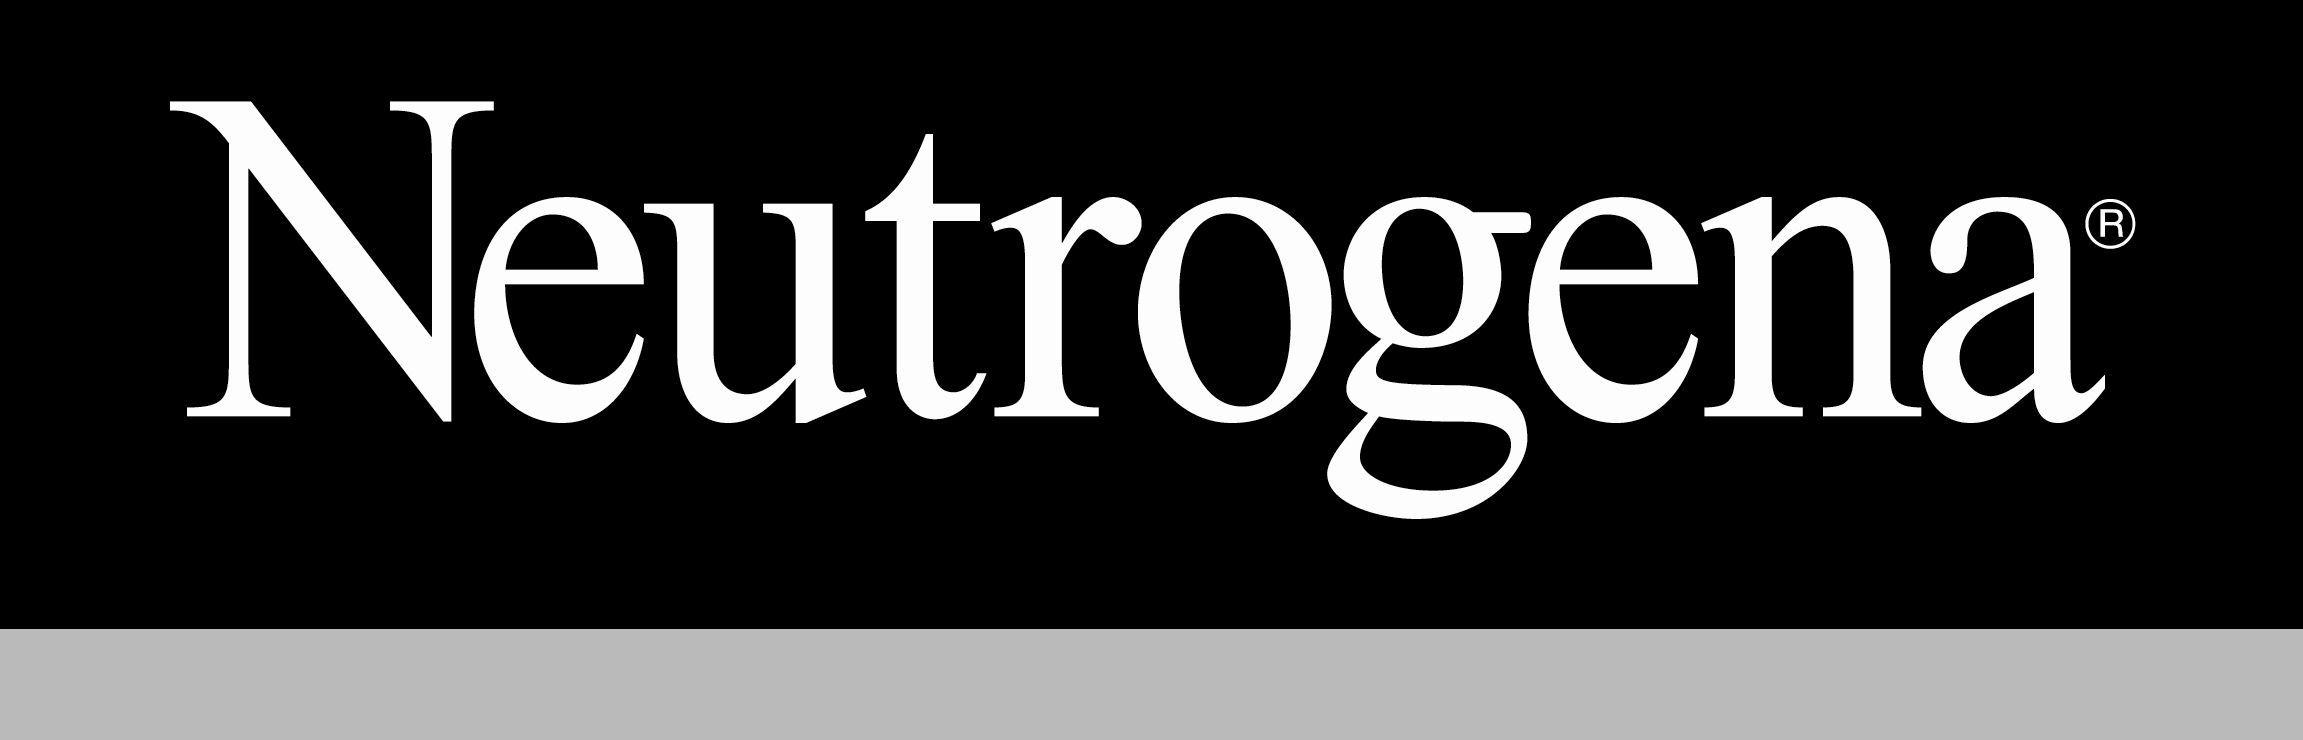 Neutrogena Logo - Neutrogena | Makeup & Skincare Logos in 2019 | Logos, Skincare logo ...